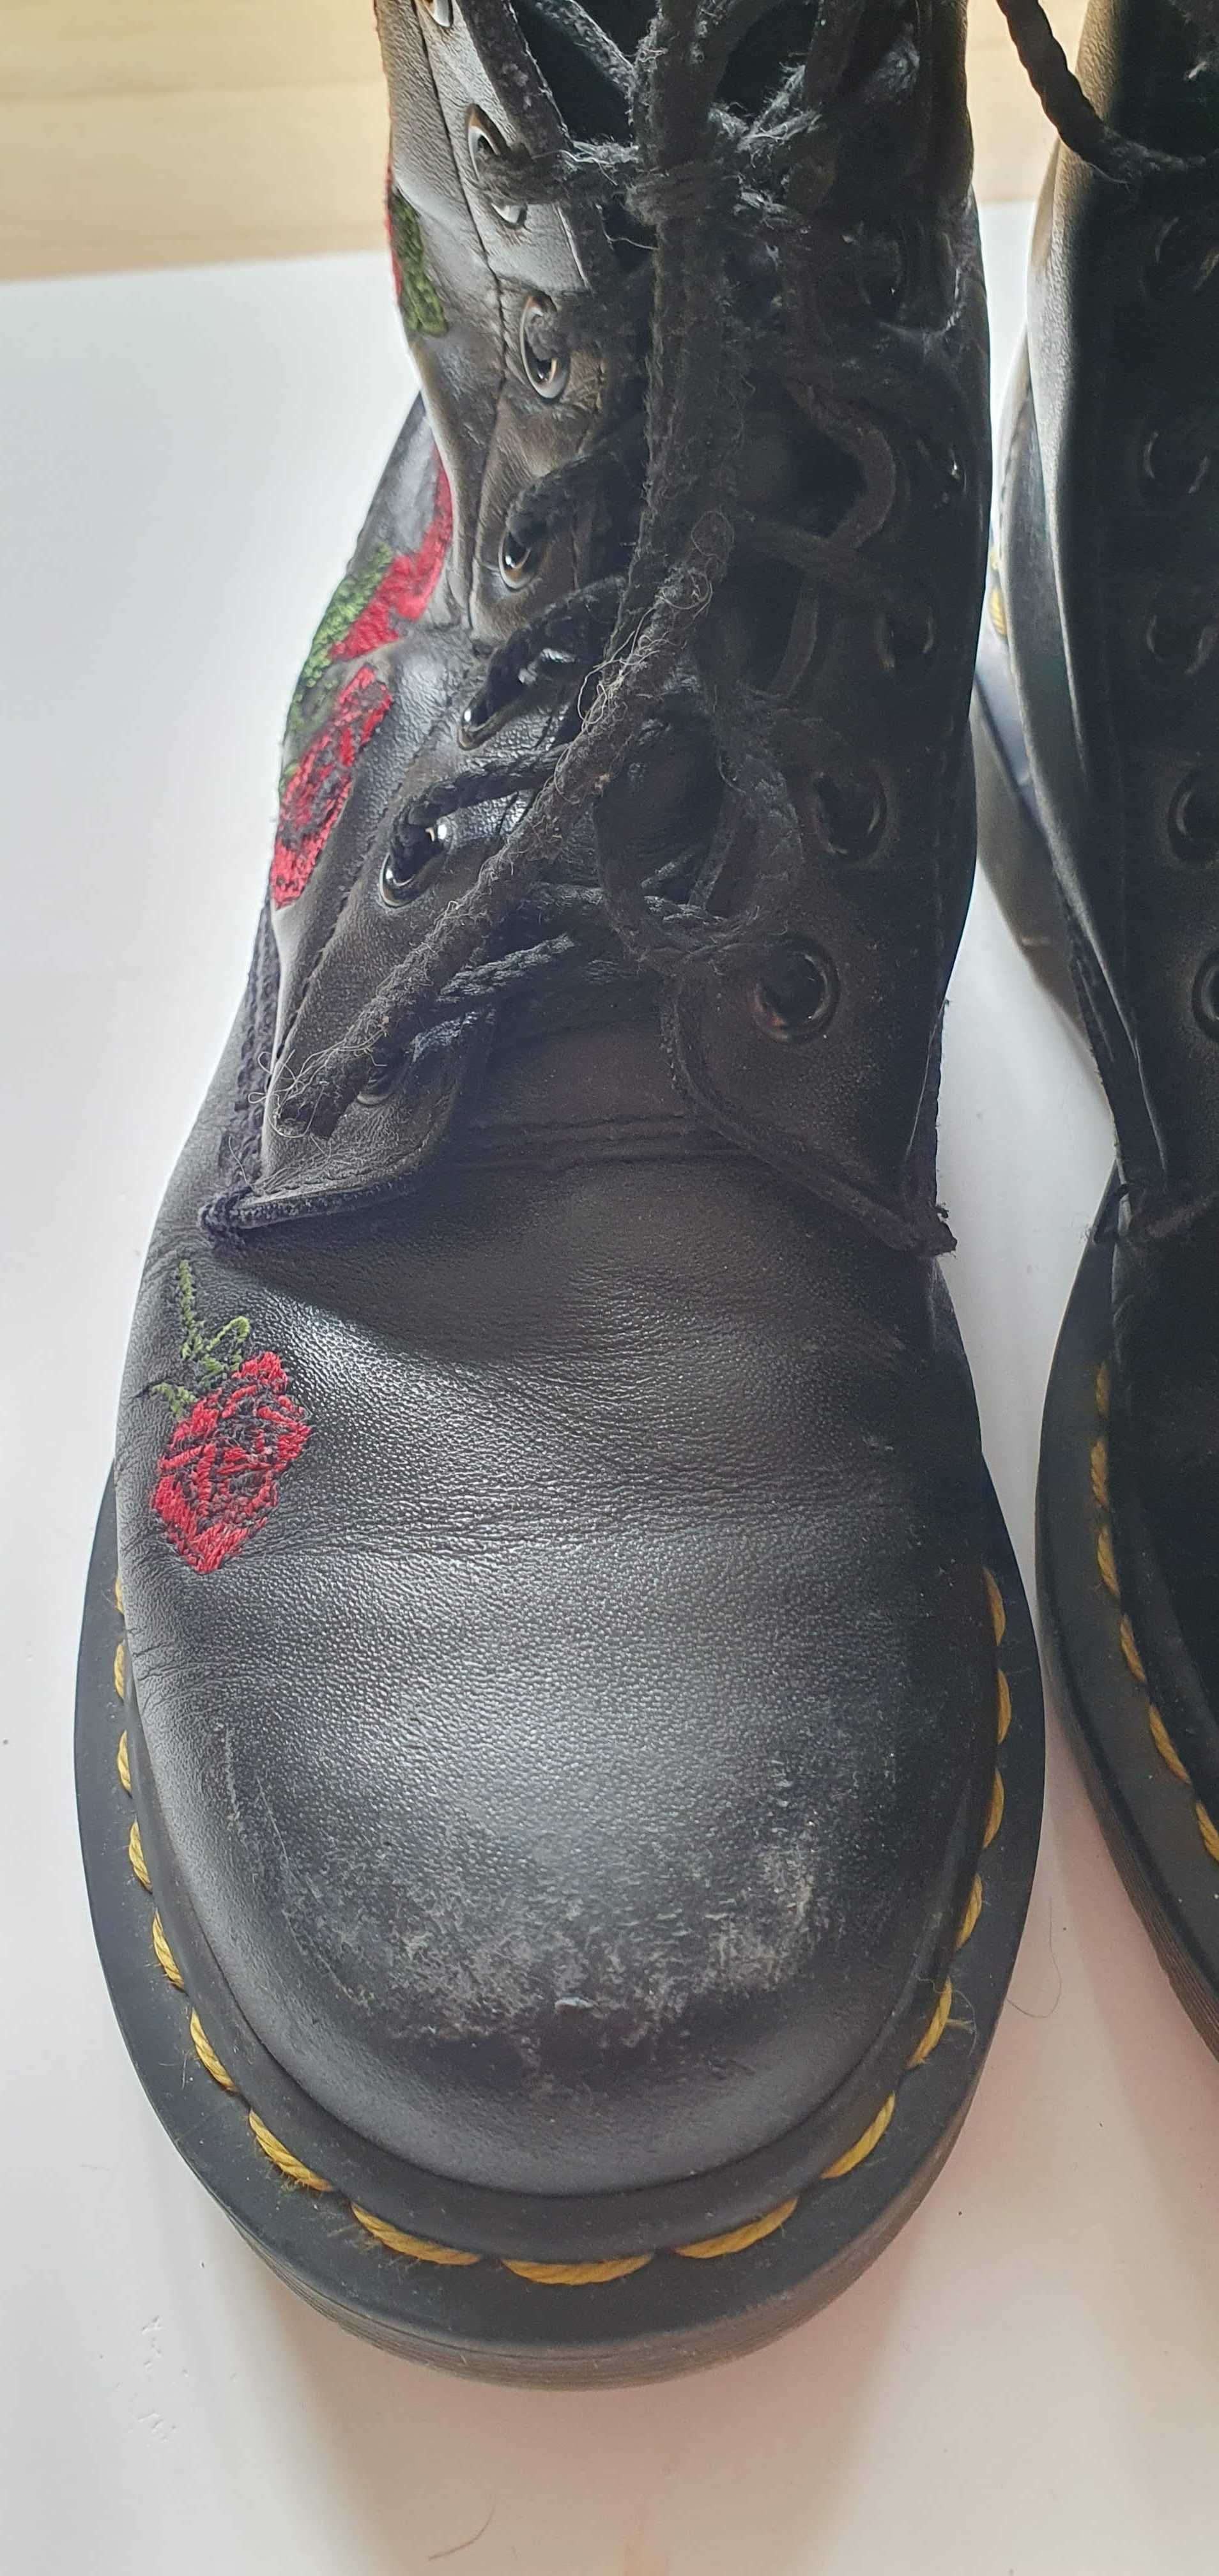 Buty Dr. Martens, czarne z motywem róży (1460 VONDA Black Softy)